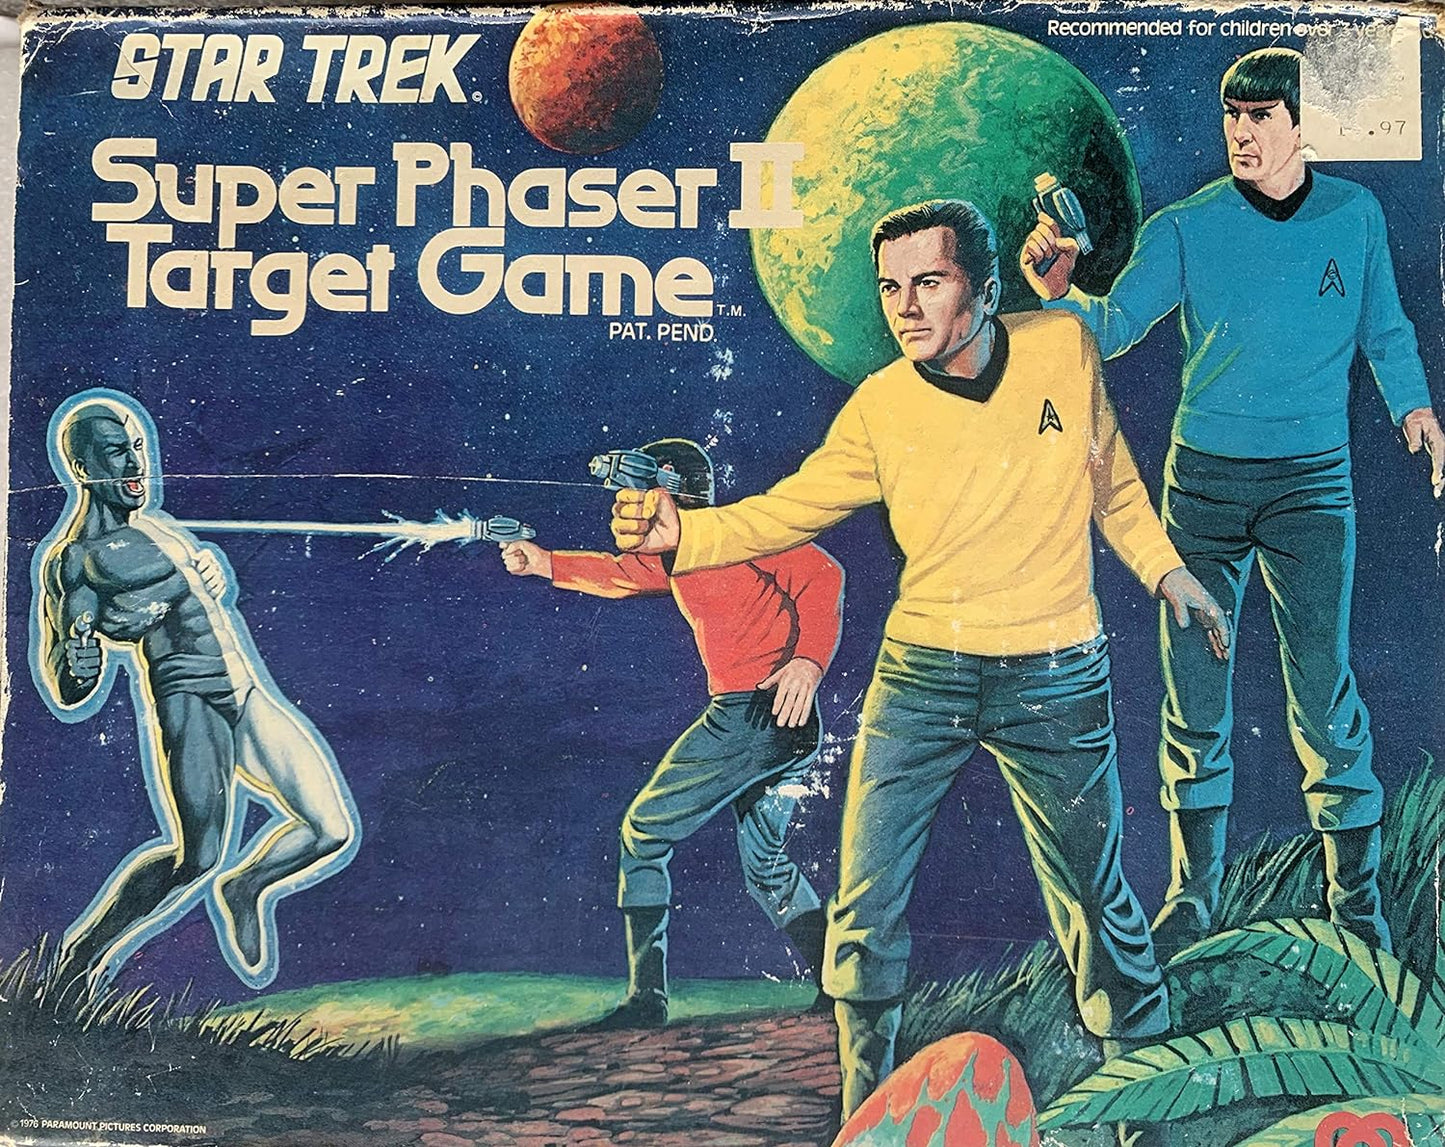 Vintage Mego Corporation 1976 Star Trek The Original Series Super Phaser II Target Game - Fantastic Condition Fully Working In The Original Box